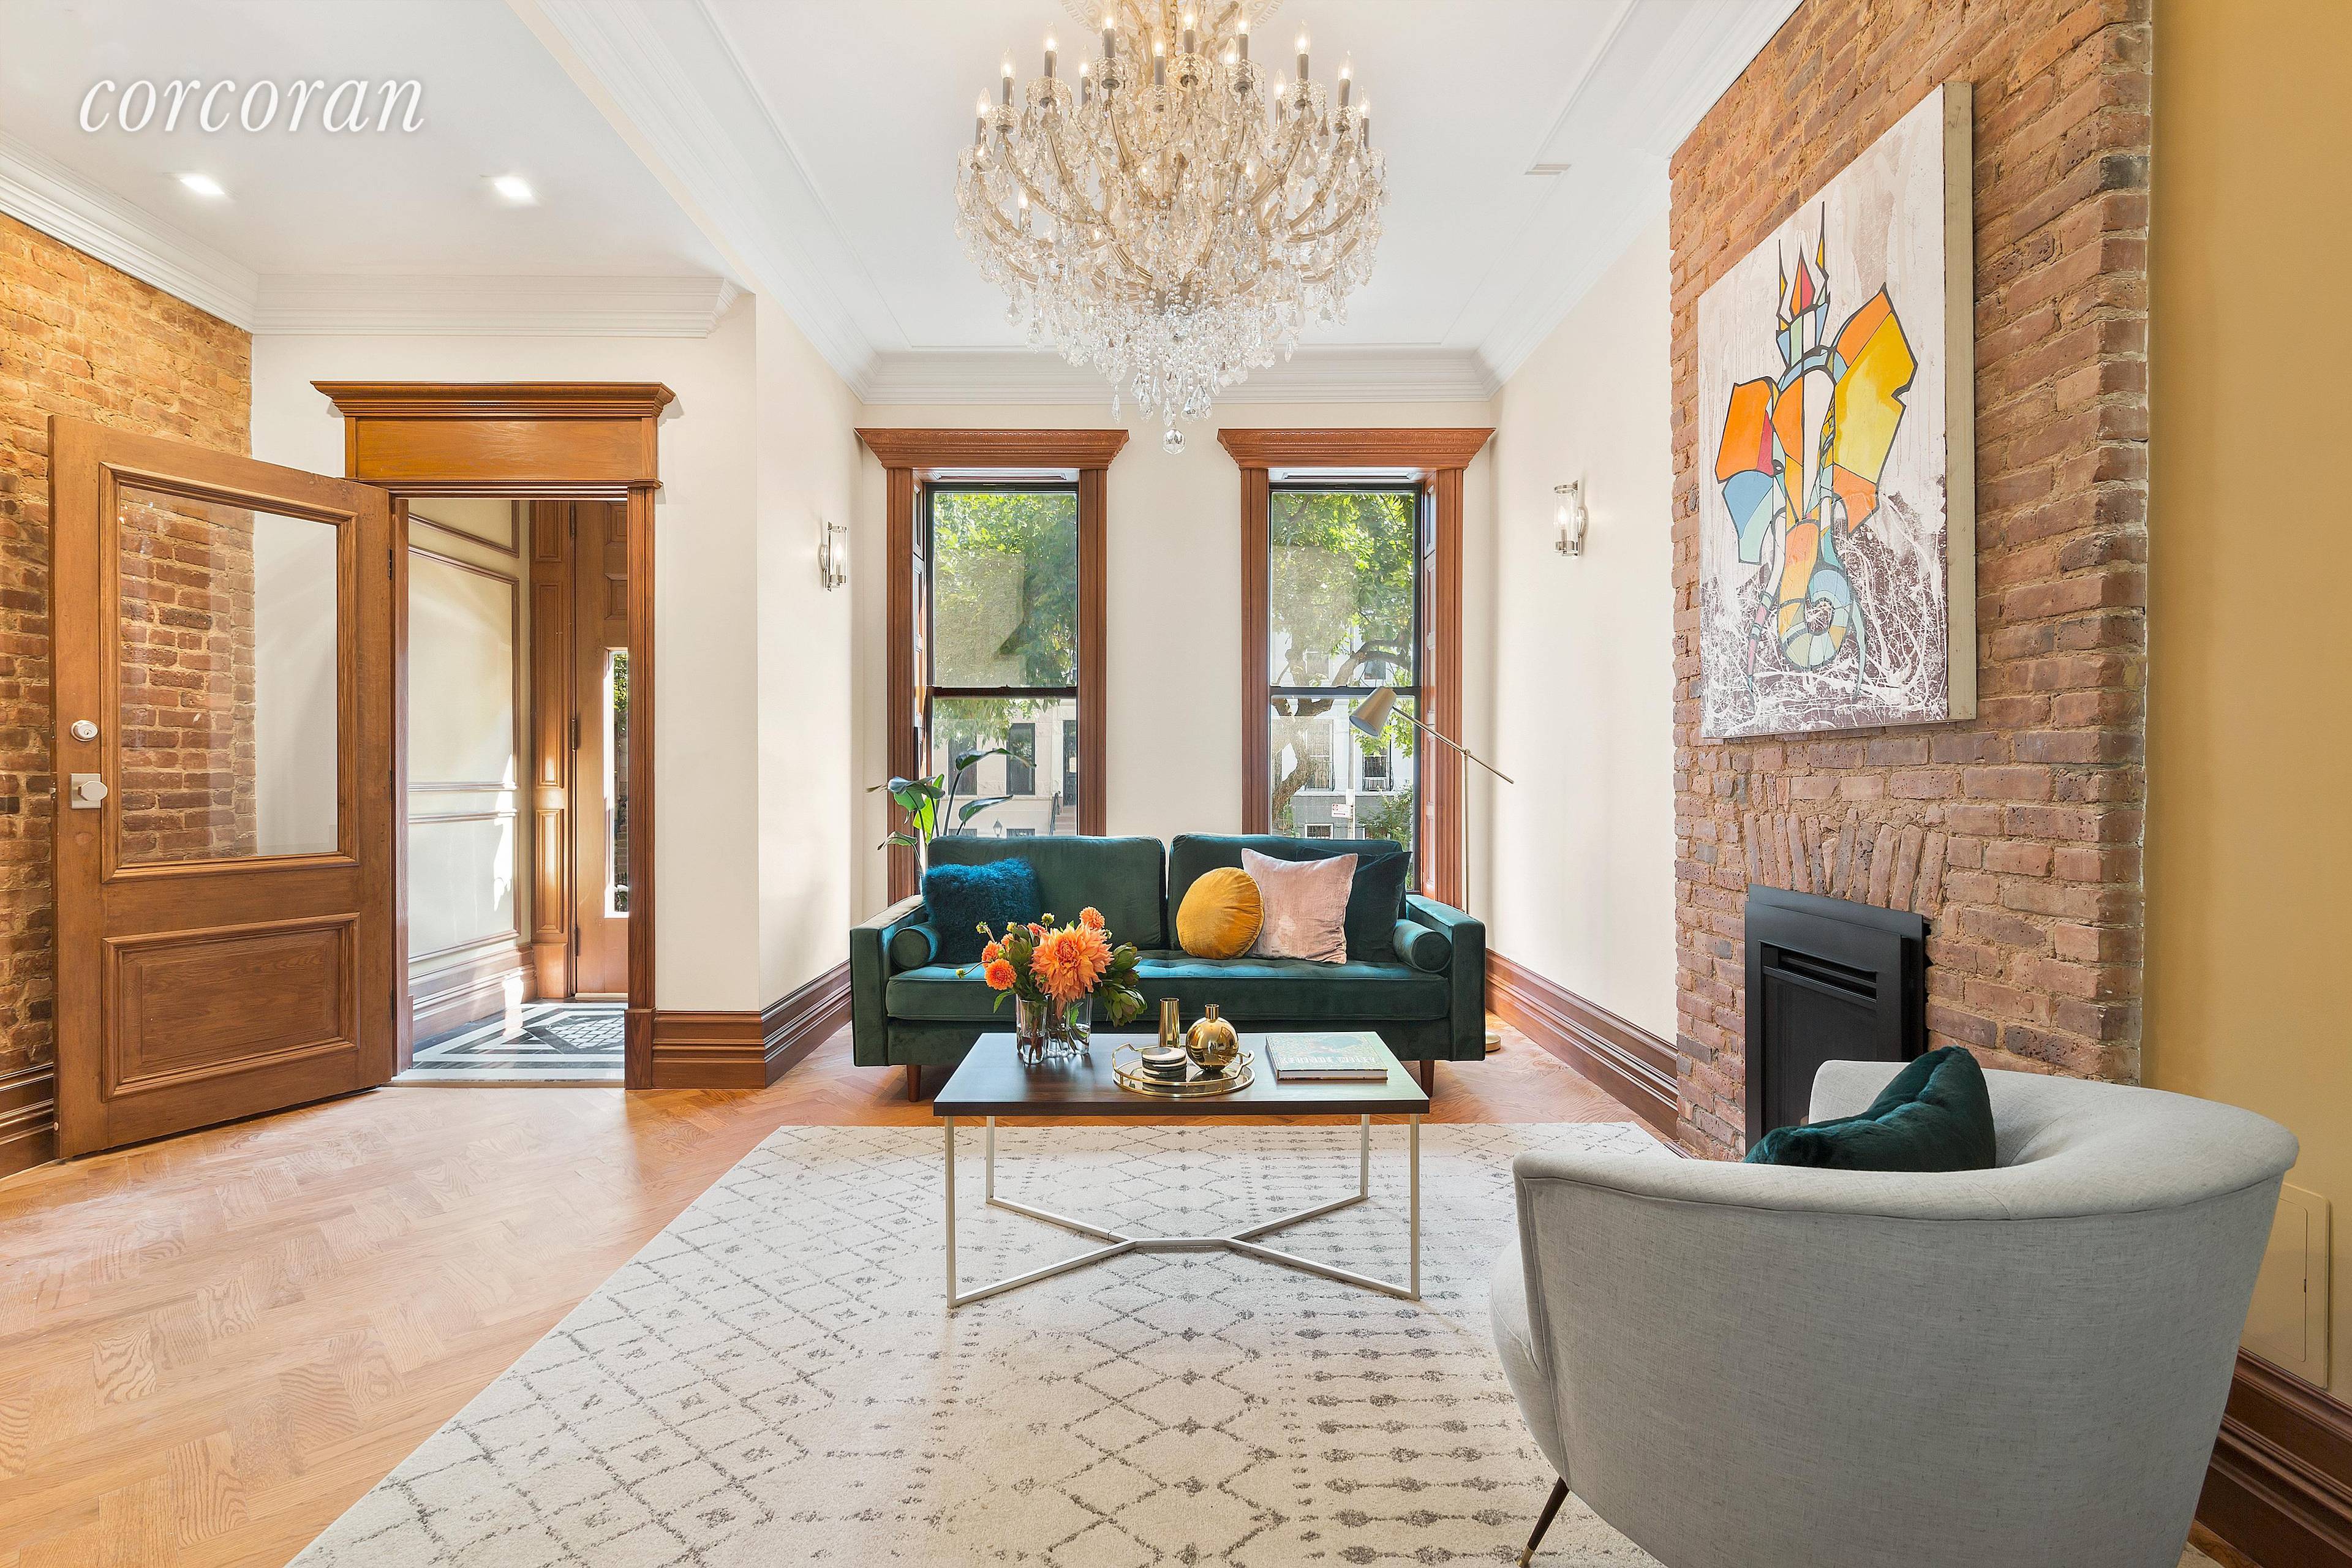 Welcome to your new state of the art, bespoke smart home at 281 Van Buren Street.